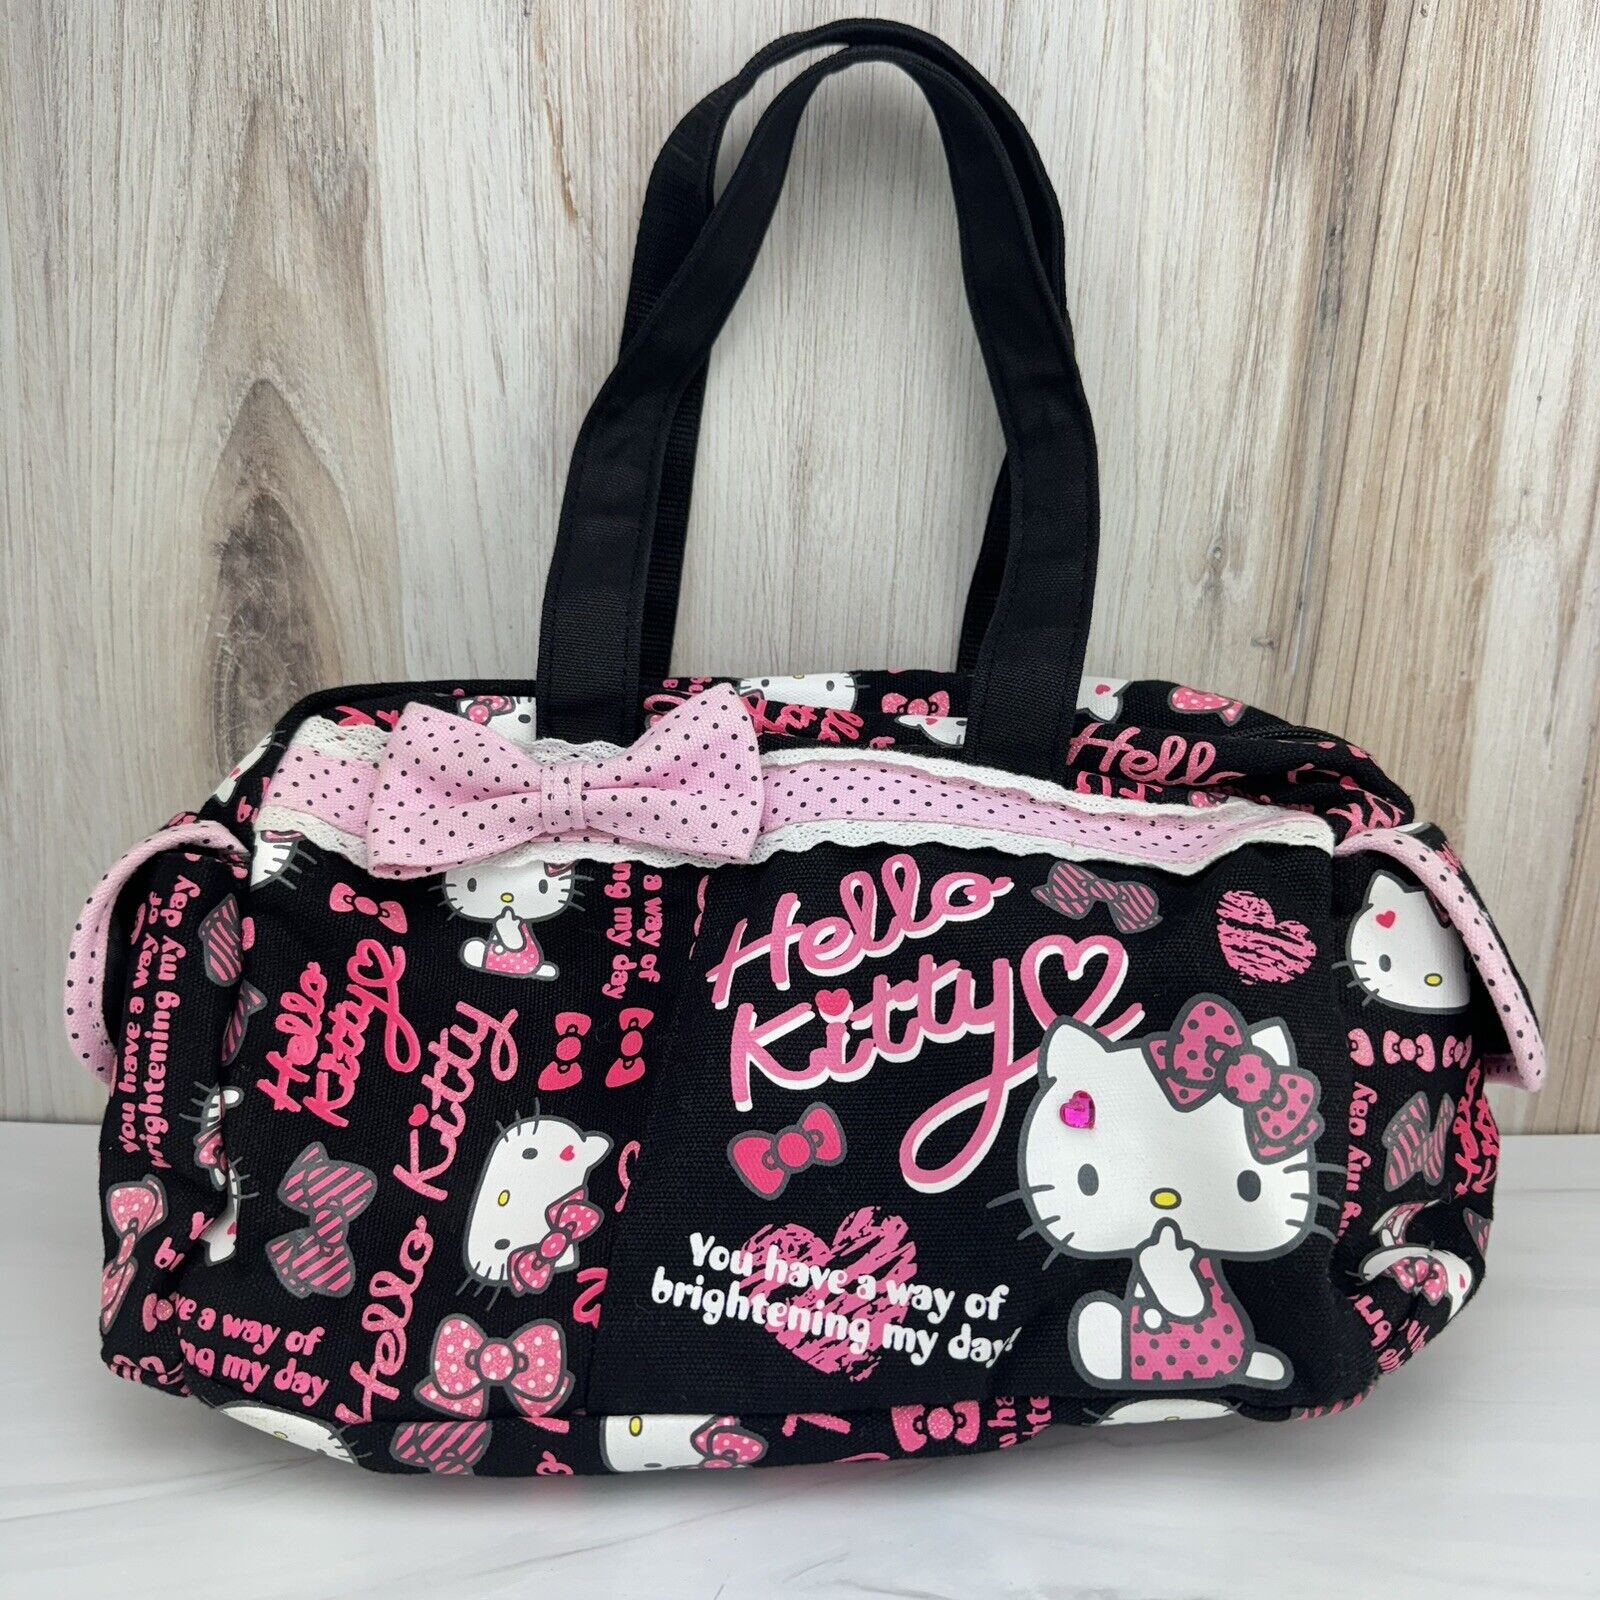 2012 Sanrio Smiles Hello Kitty Duffel Bag Purse Canvas  Tote Black Pink